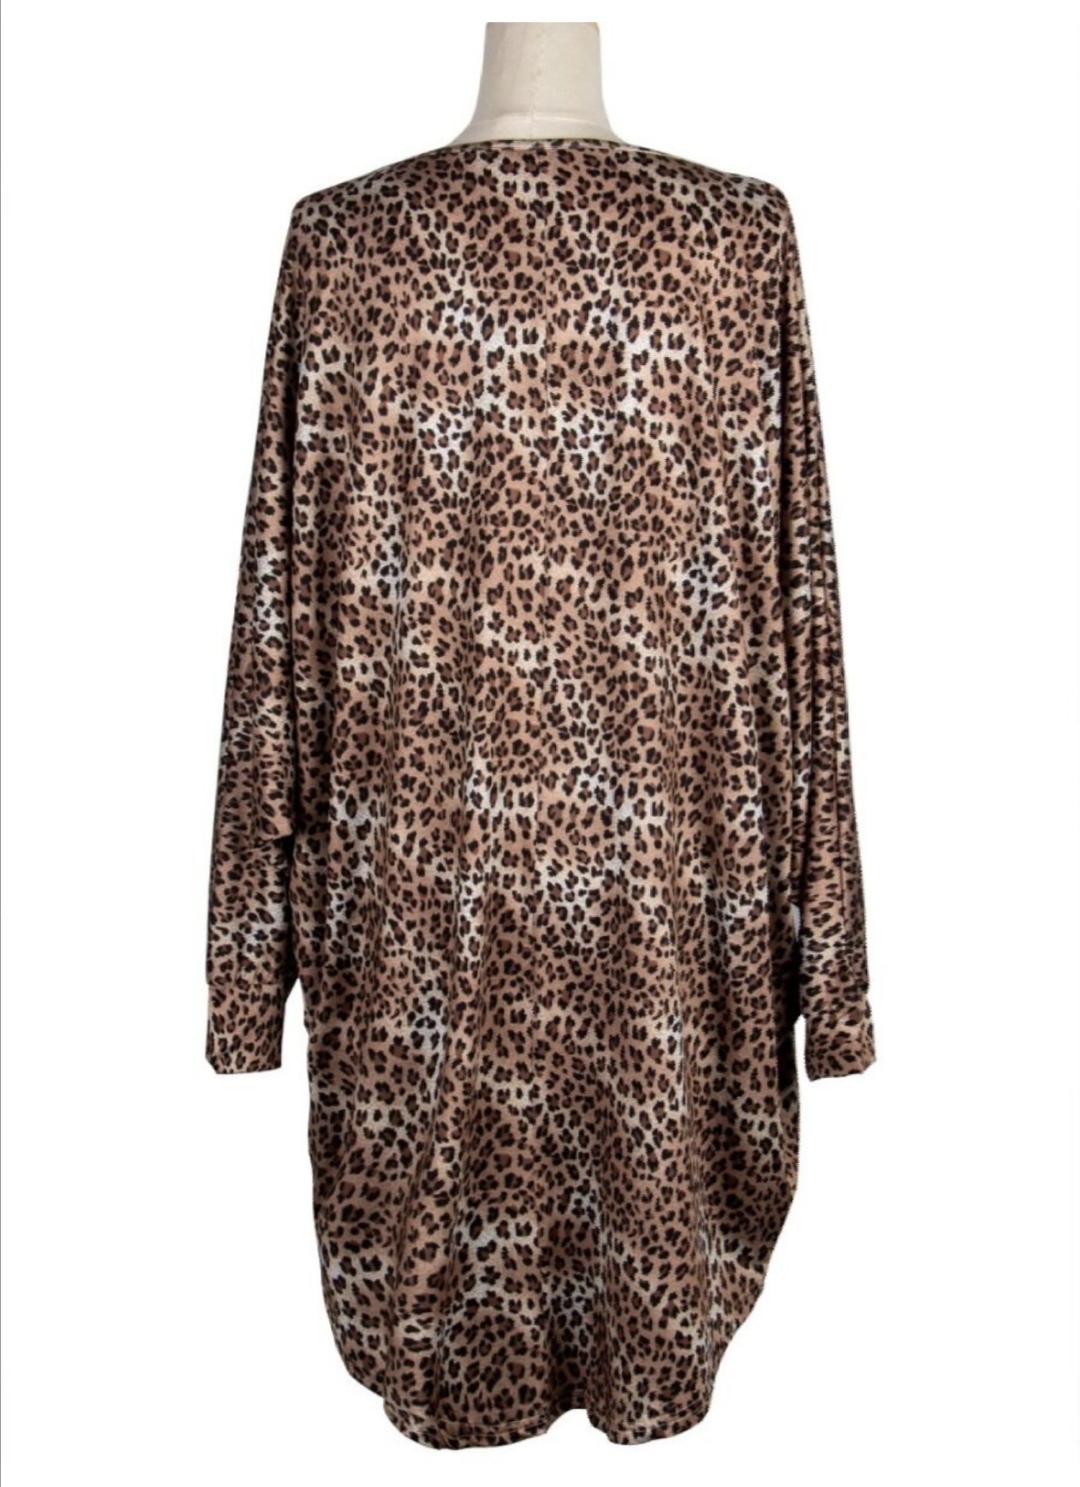 Sexy Leopard Dress - LoveModernVintage